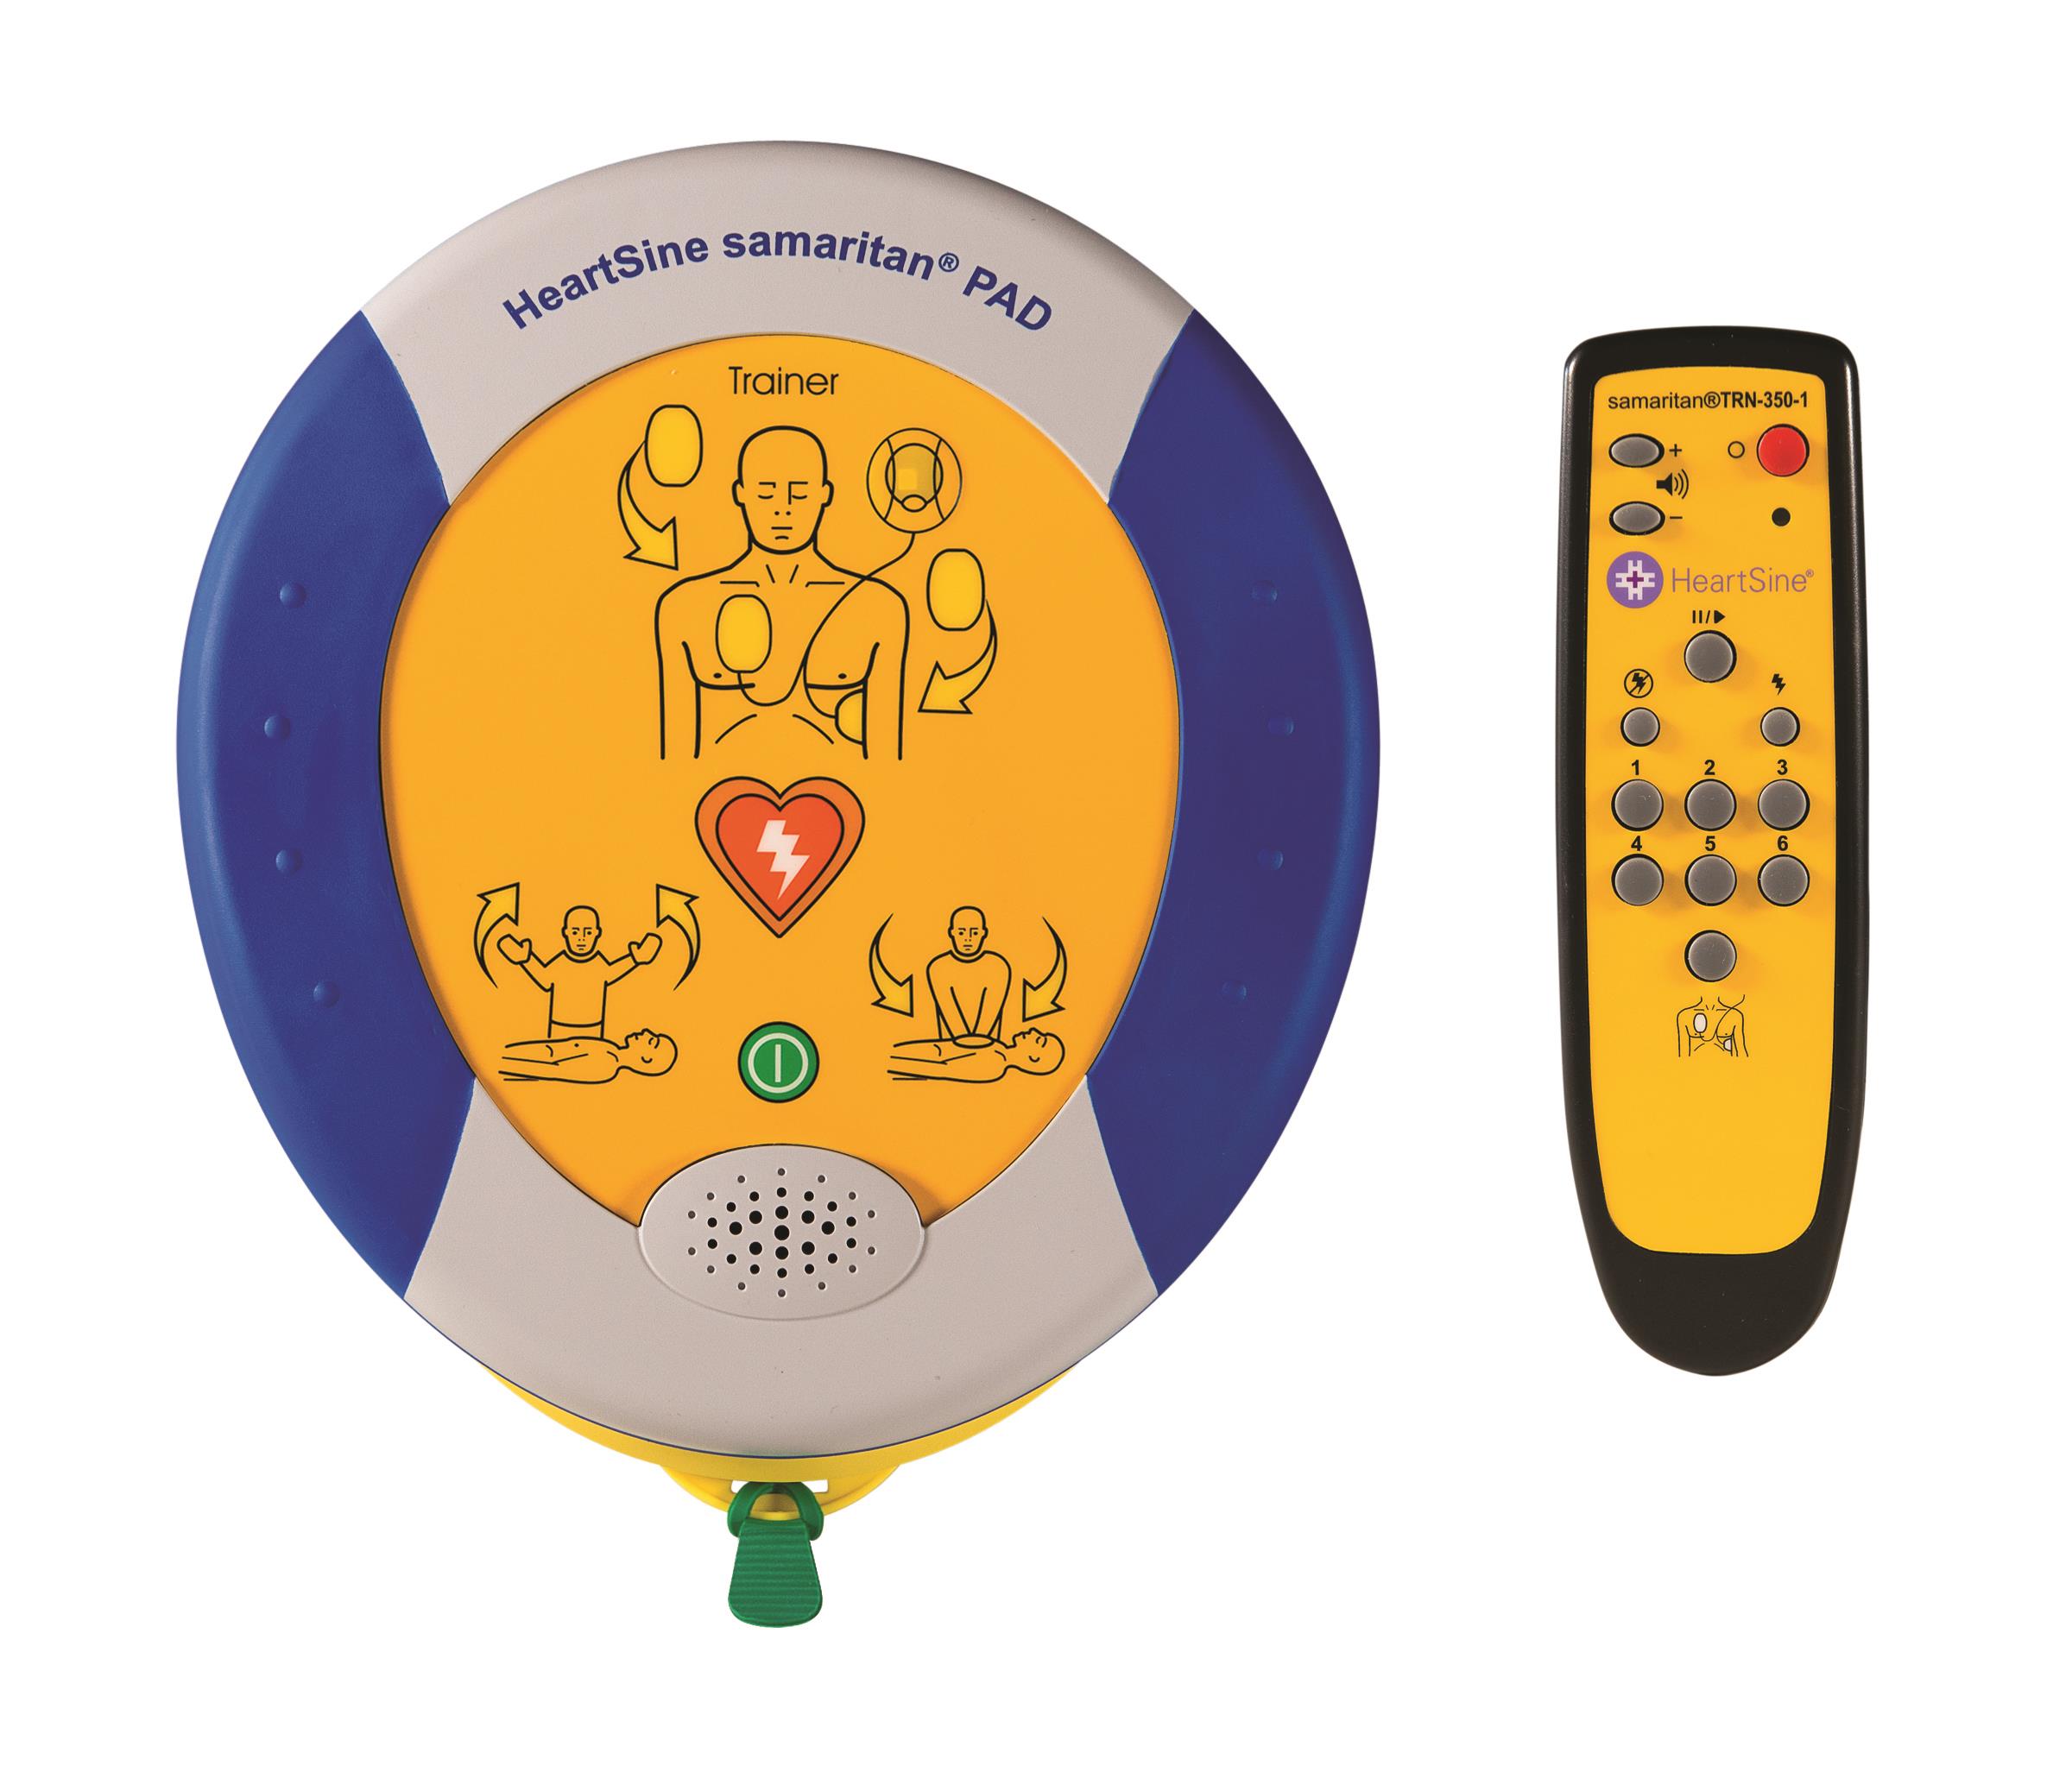 PAD 500 Übungs- und Trainingsdefibrillator-Set